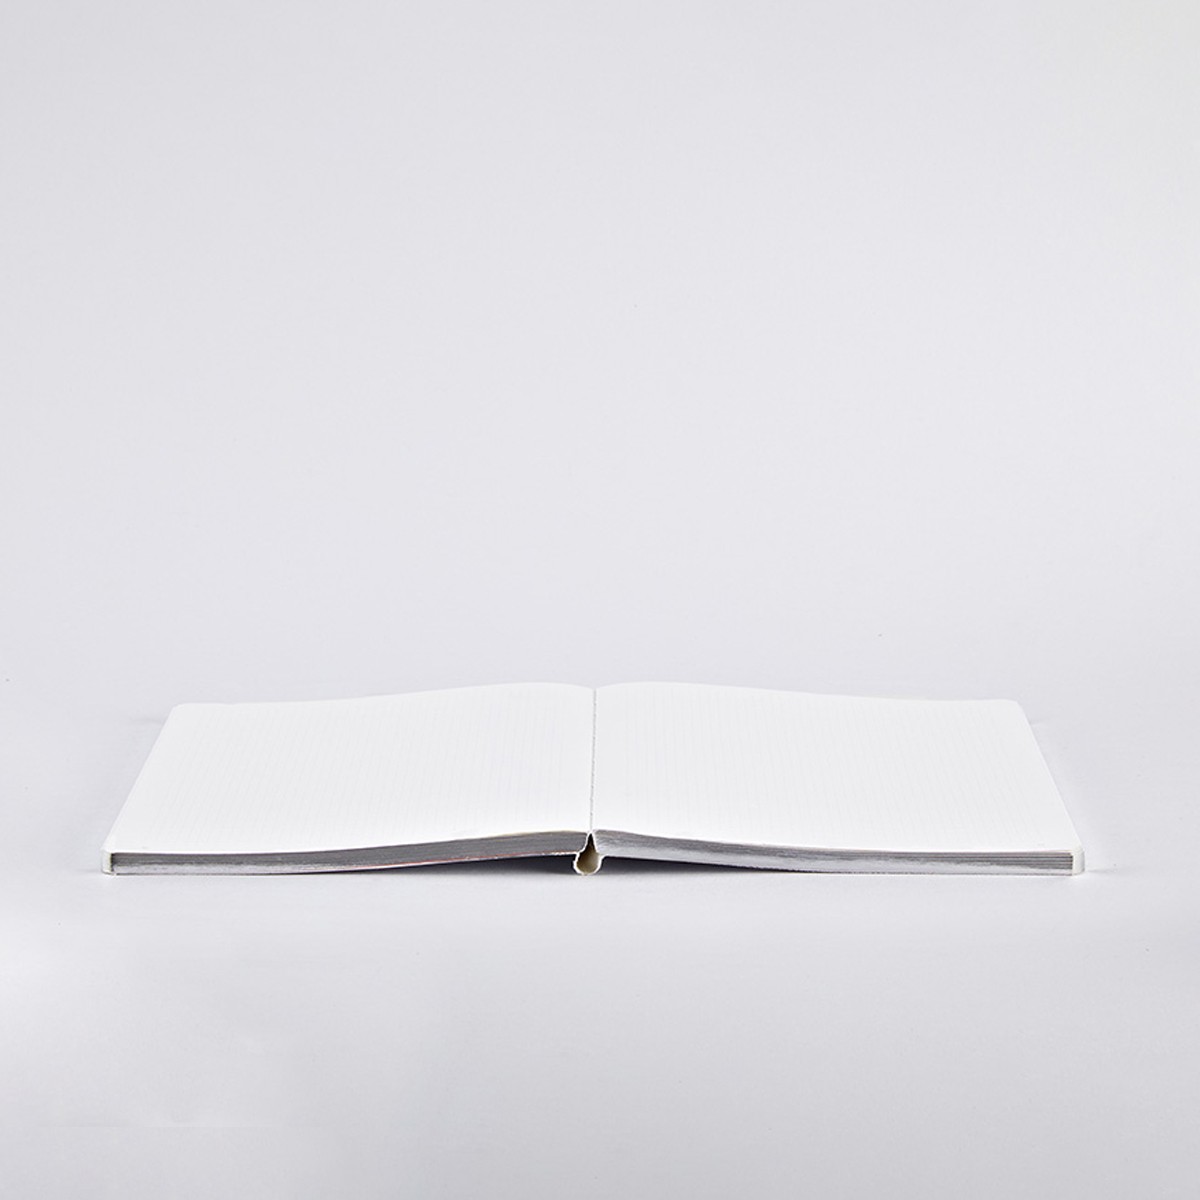 Nuuna Notebook Yoshiwara L Light - THE SPACE BETWEEN